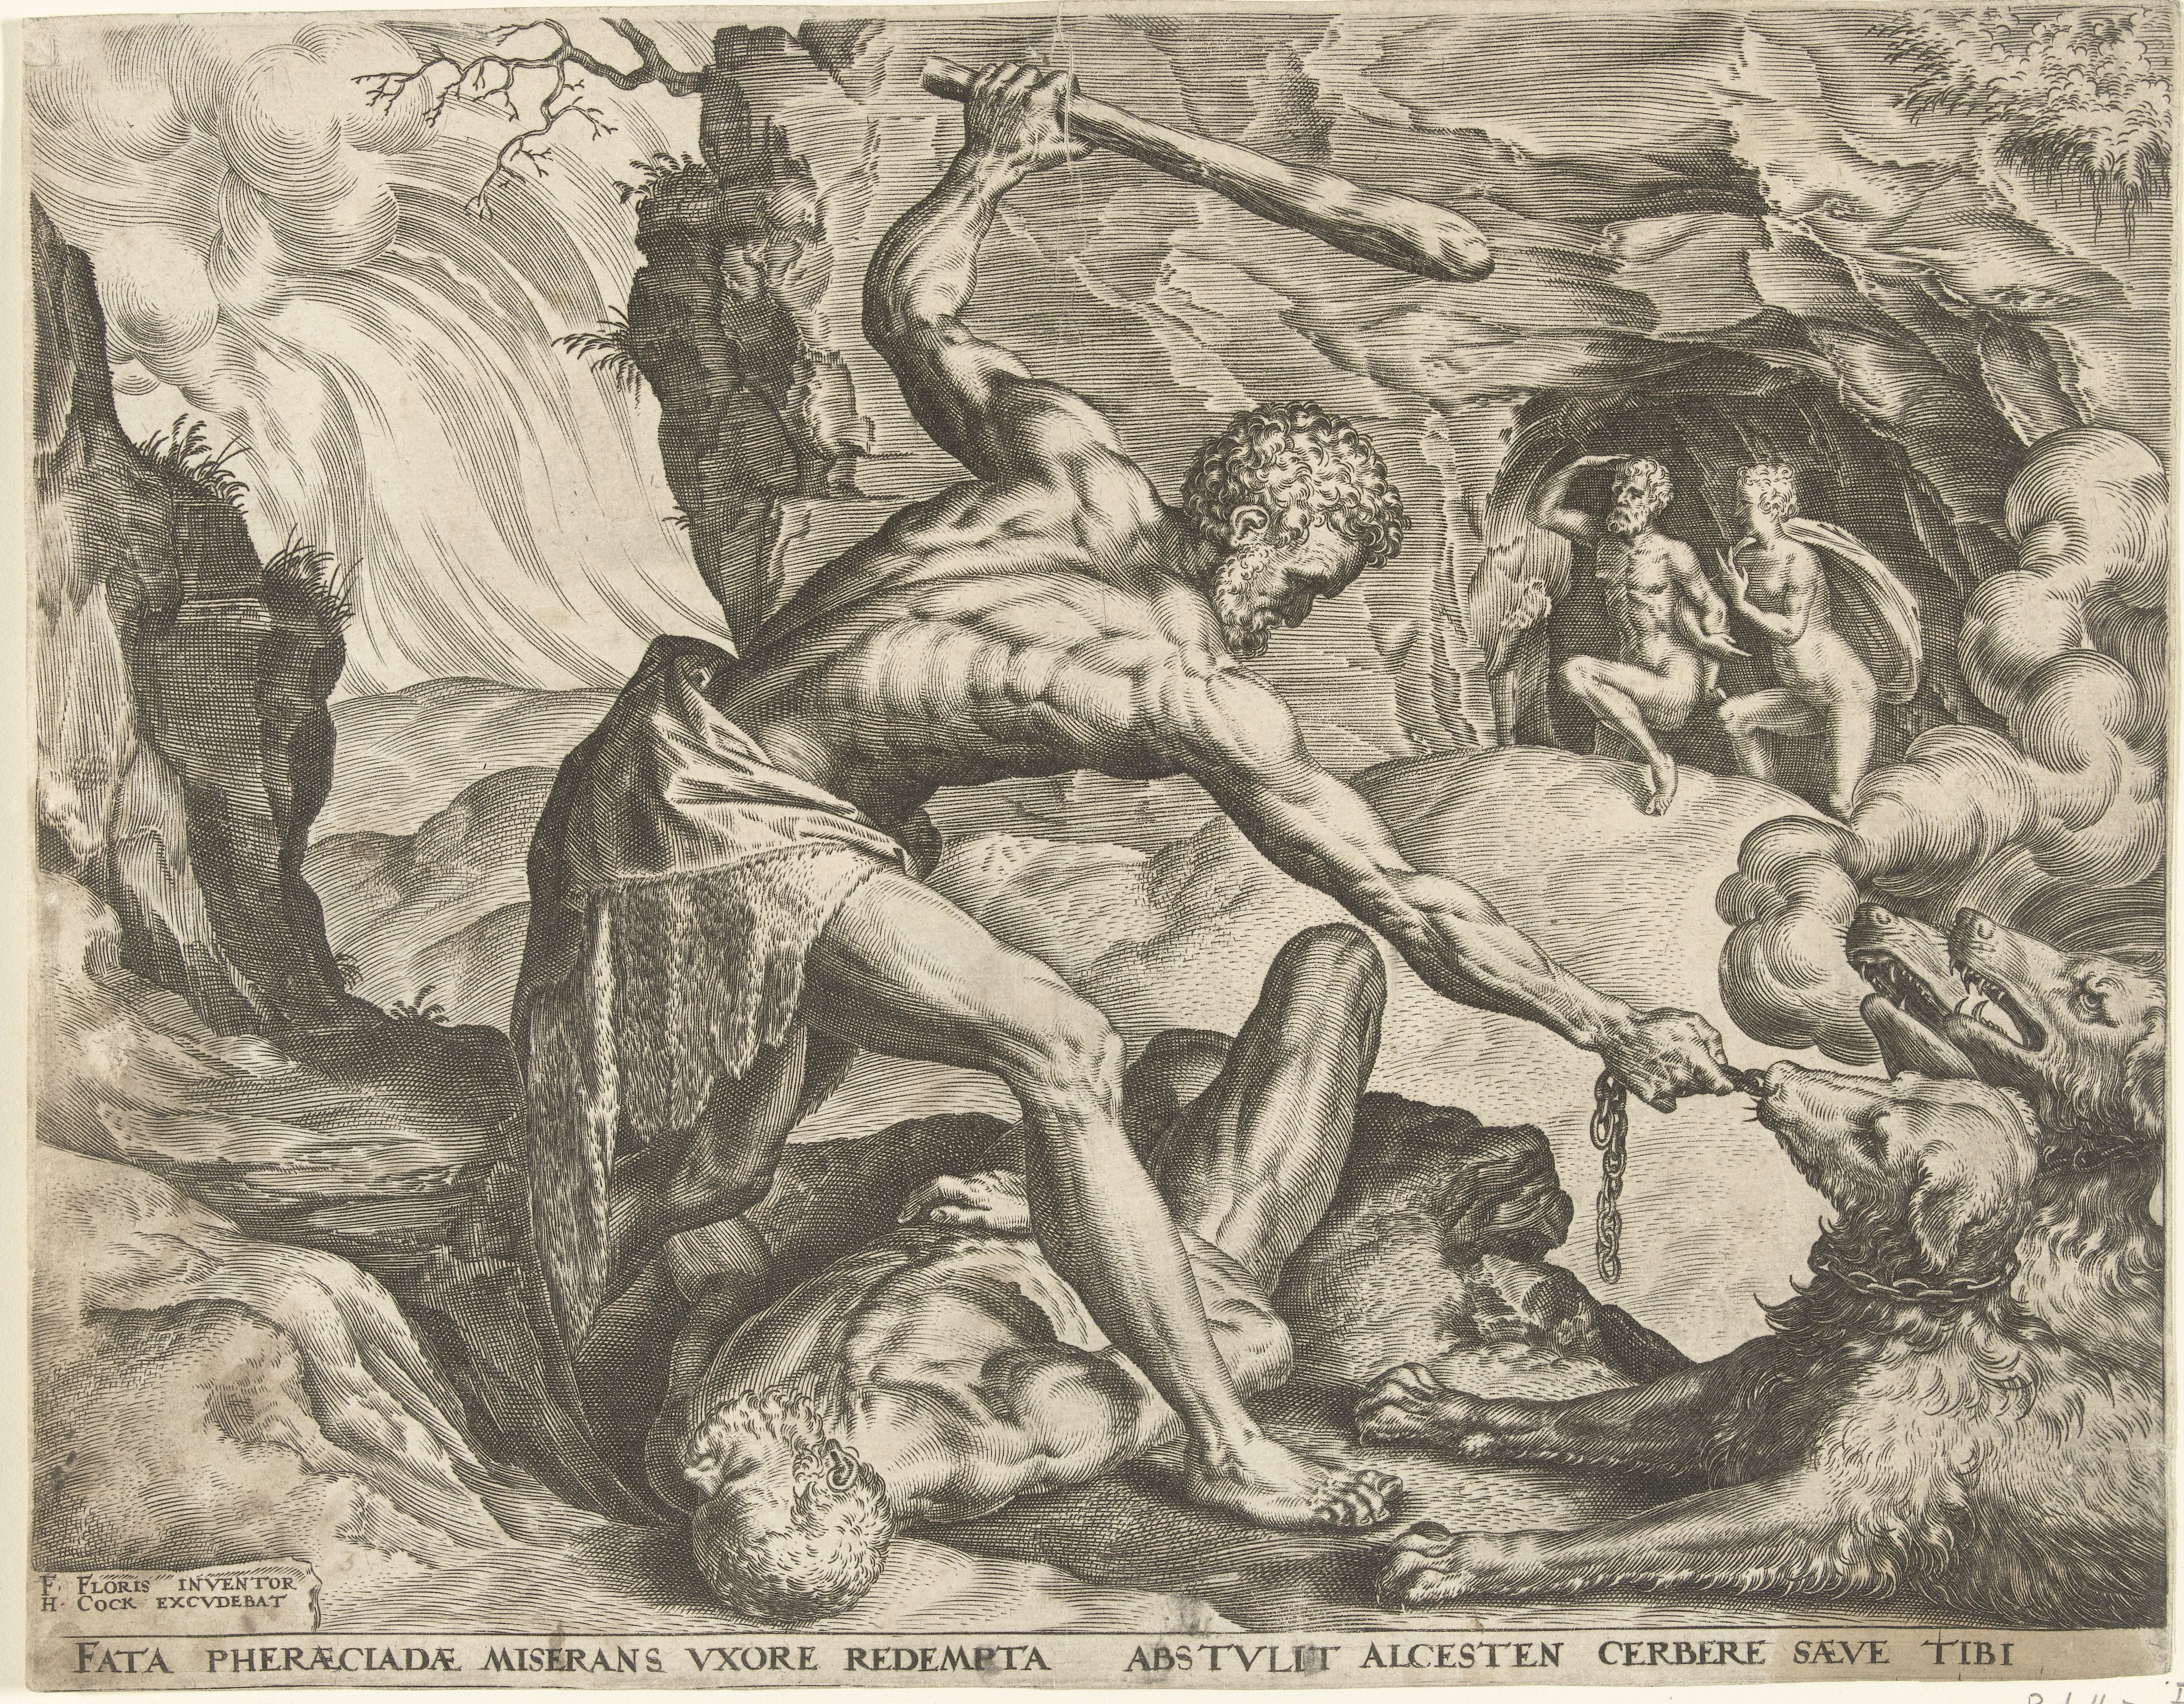 File:Hercules sleept Cerberus de hel uit Werken van Hercules (serietitel),  RP-P-1905-3925.jpg - Wikimedia Commons